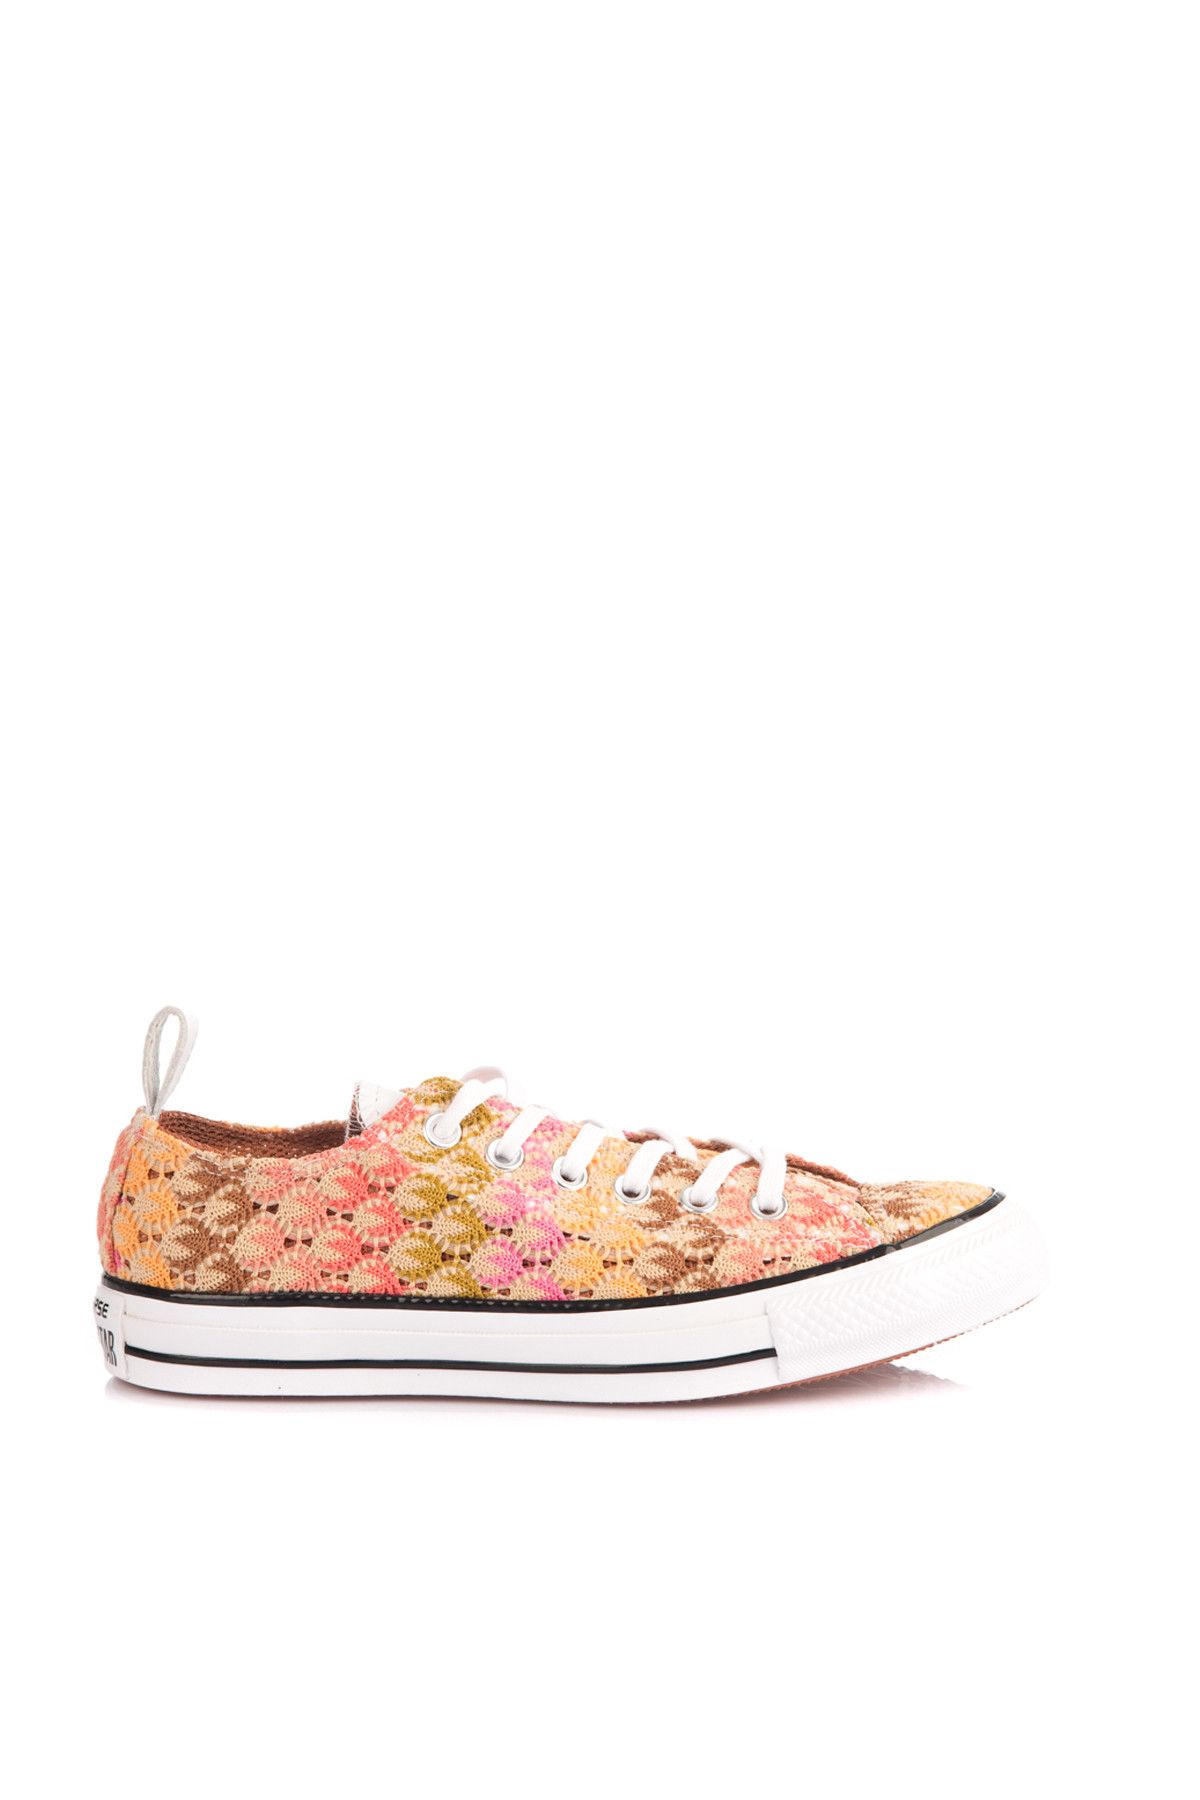 Converse Kadın Pembe-Sarı Sneaker 553435C